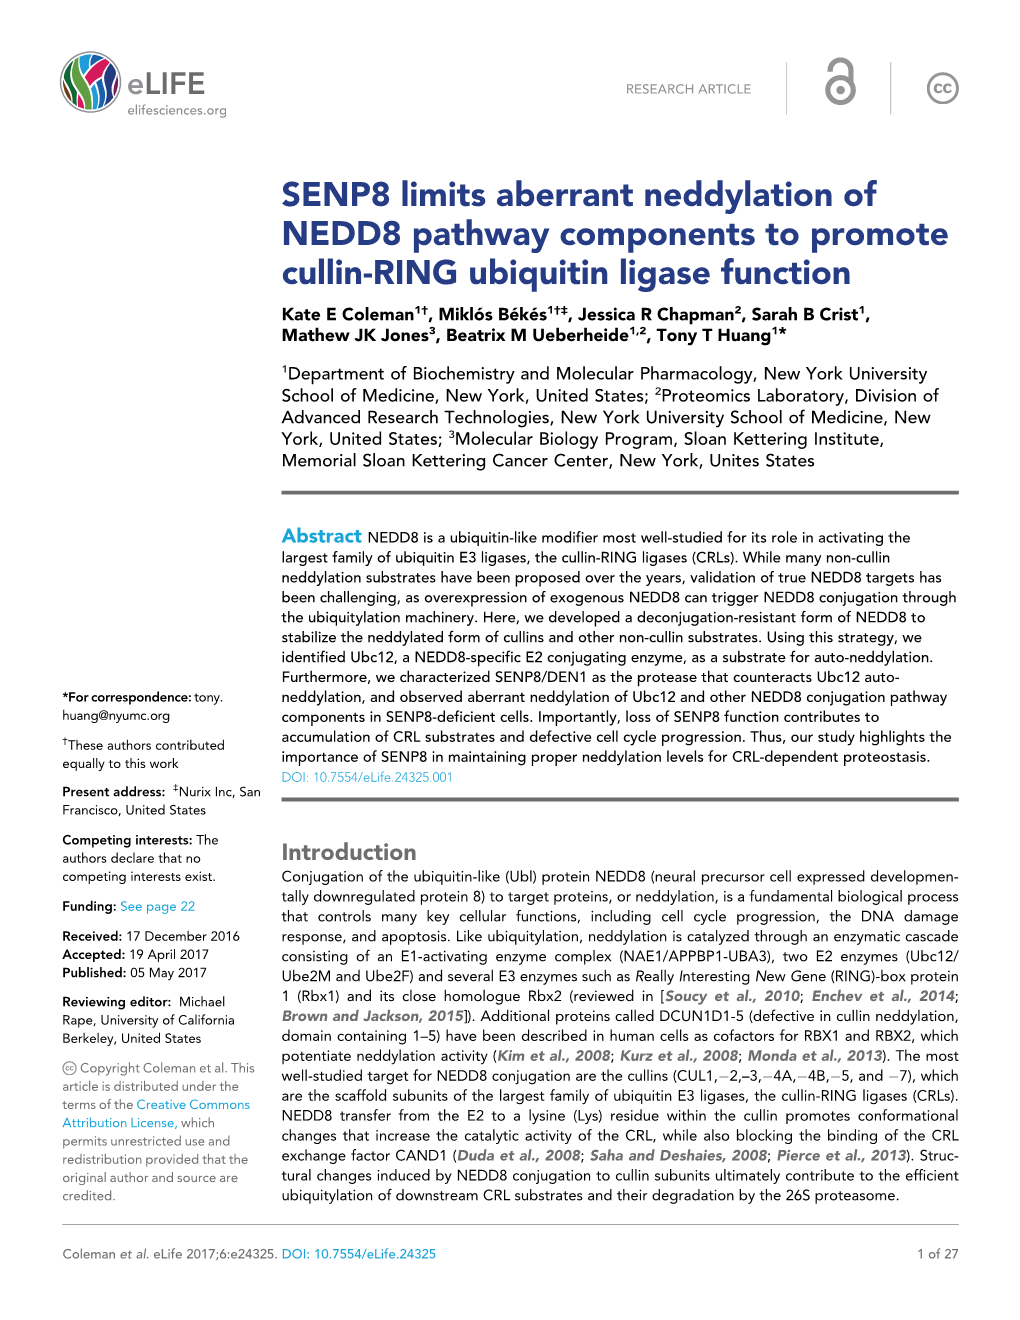 SENP8 Limits Aberrant Neddylation of NEDD8 Pathway Components To